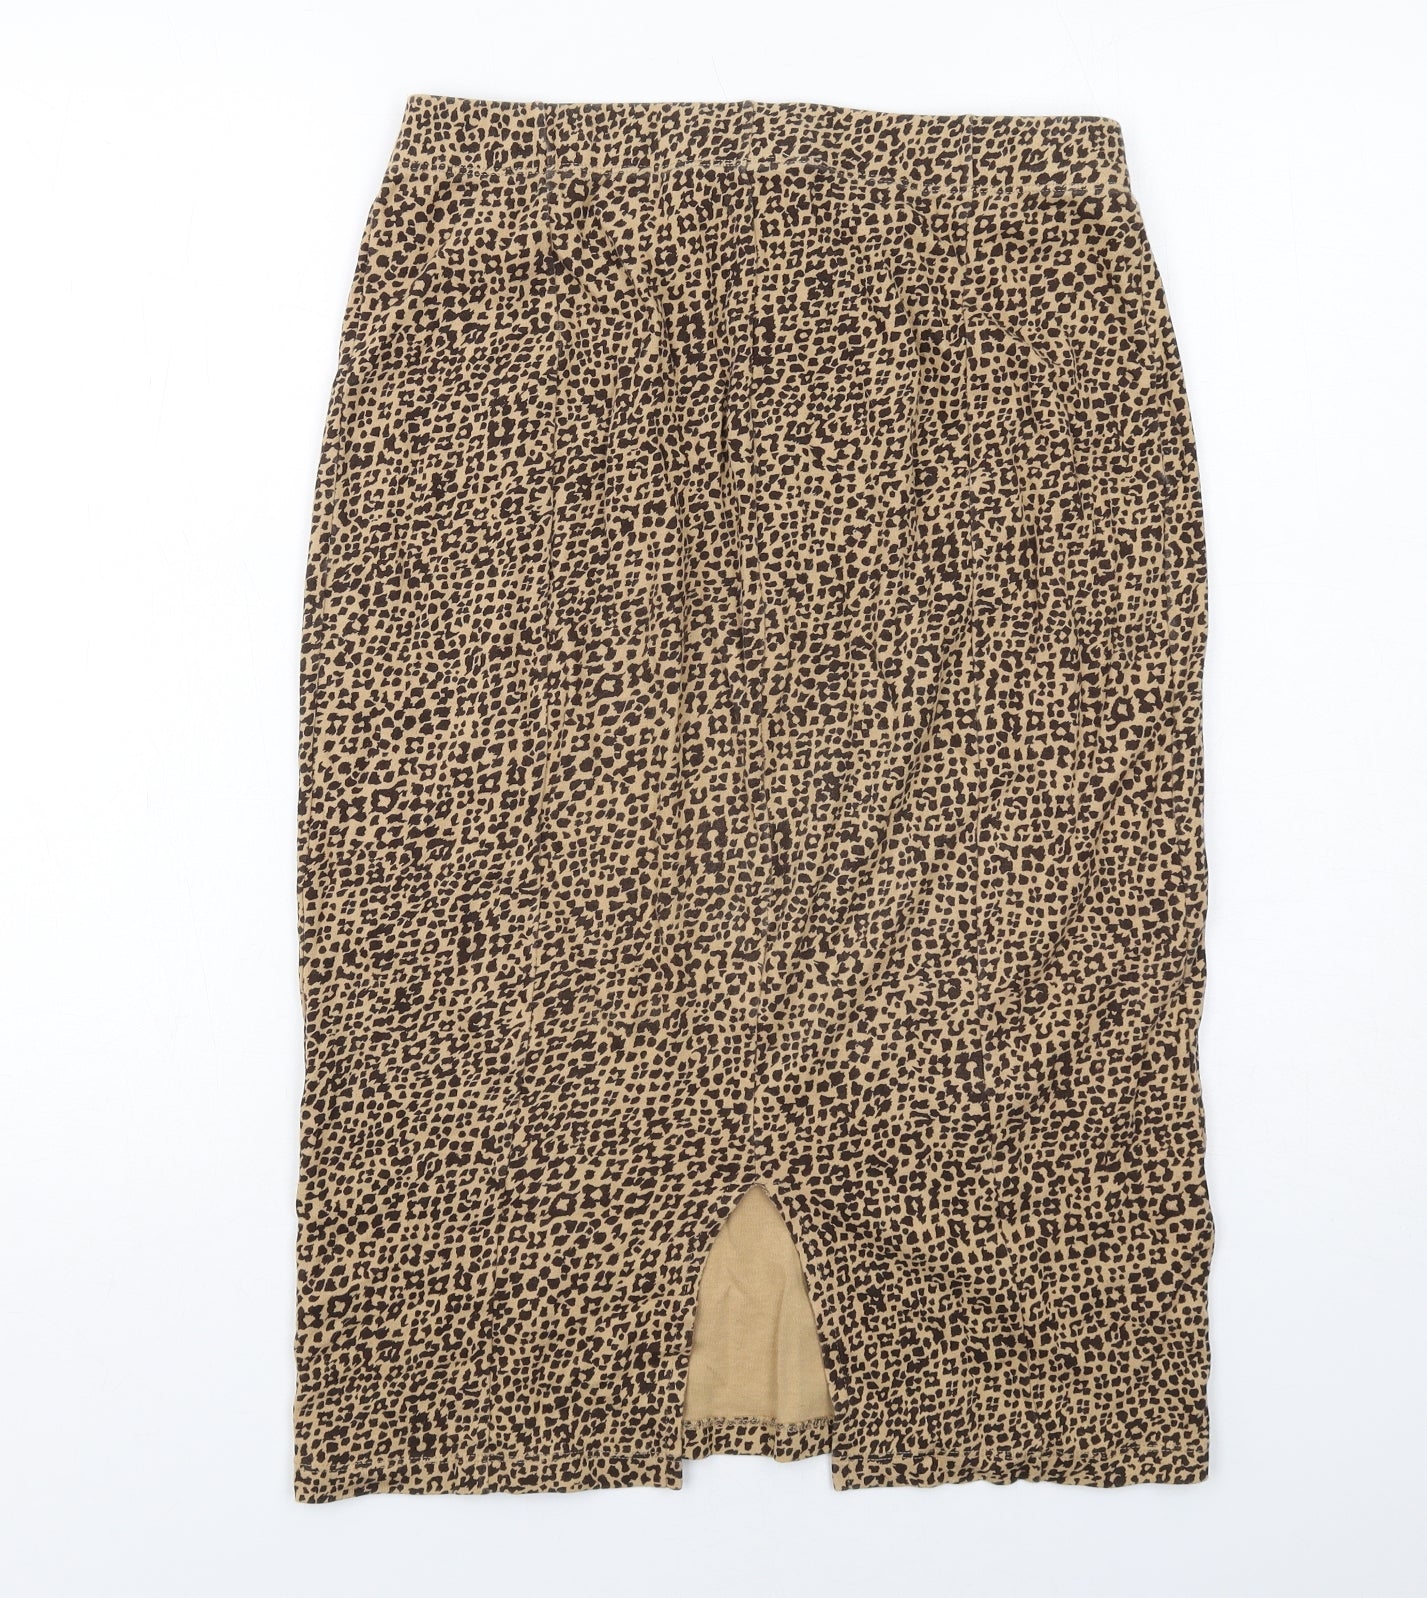 Oasis Womens Beige Animal Print Cotton Straight & Pencil Skirt Size L - Leopard pattern